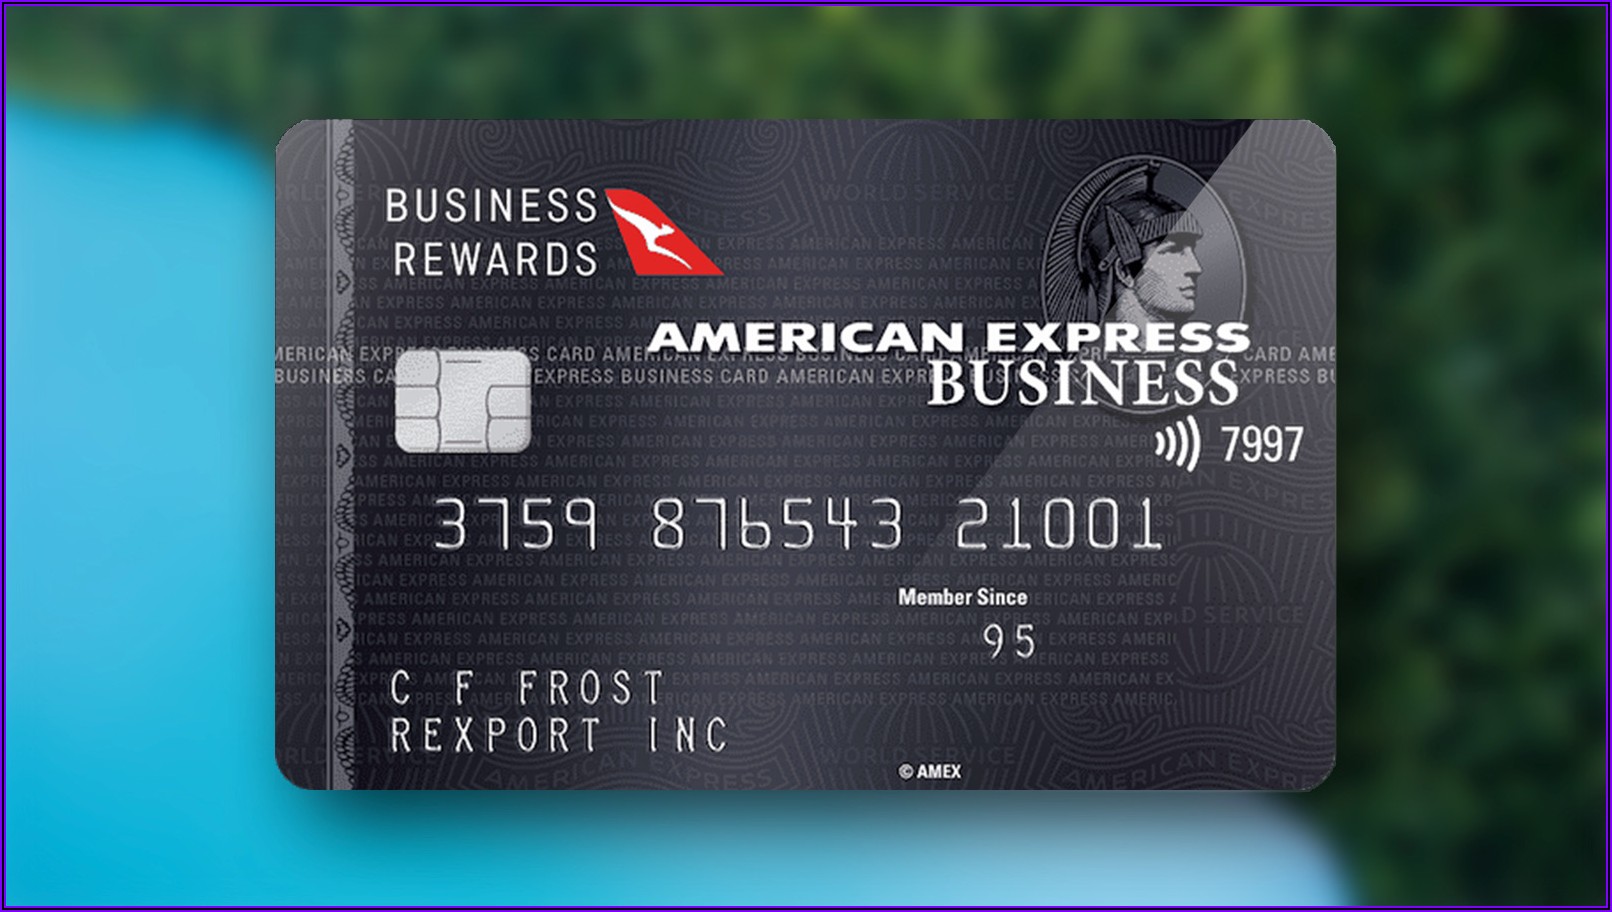 American Express Business Card Rewards